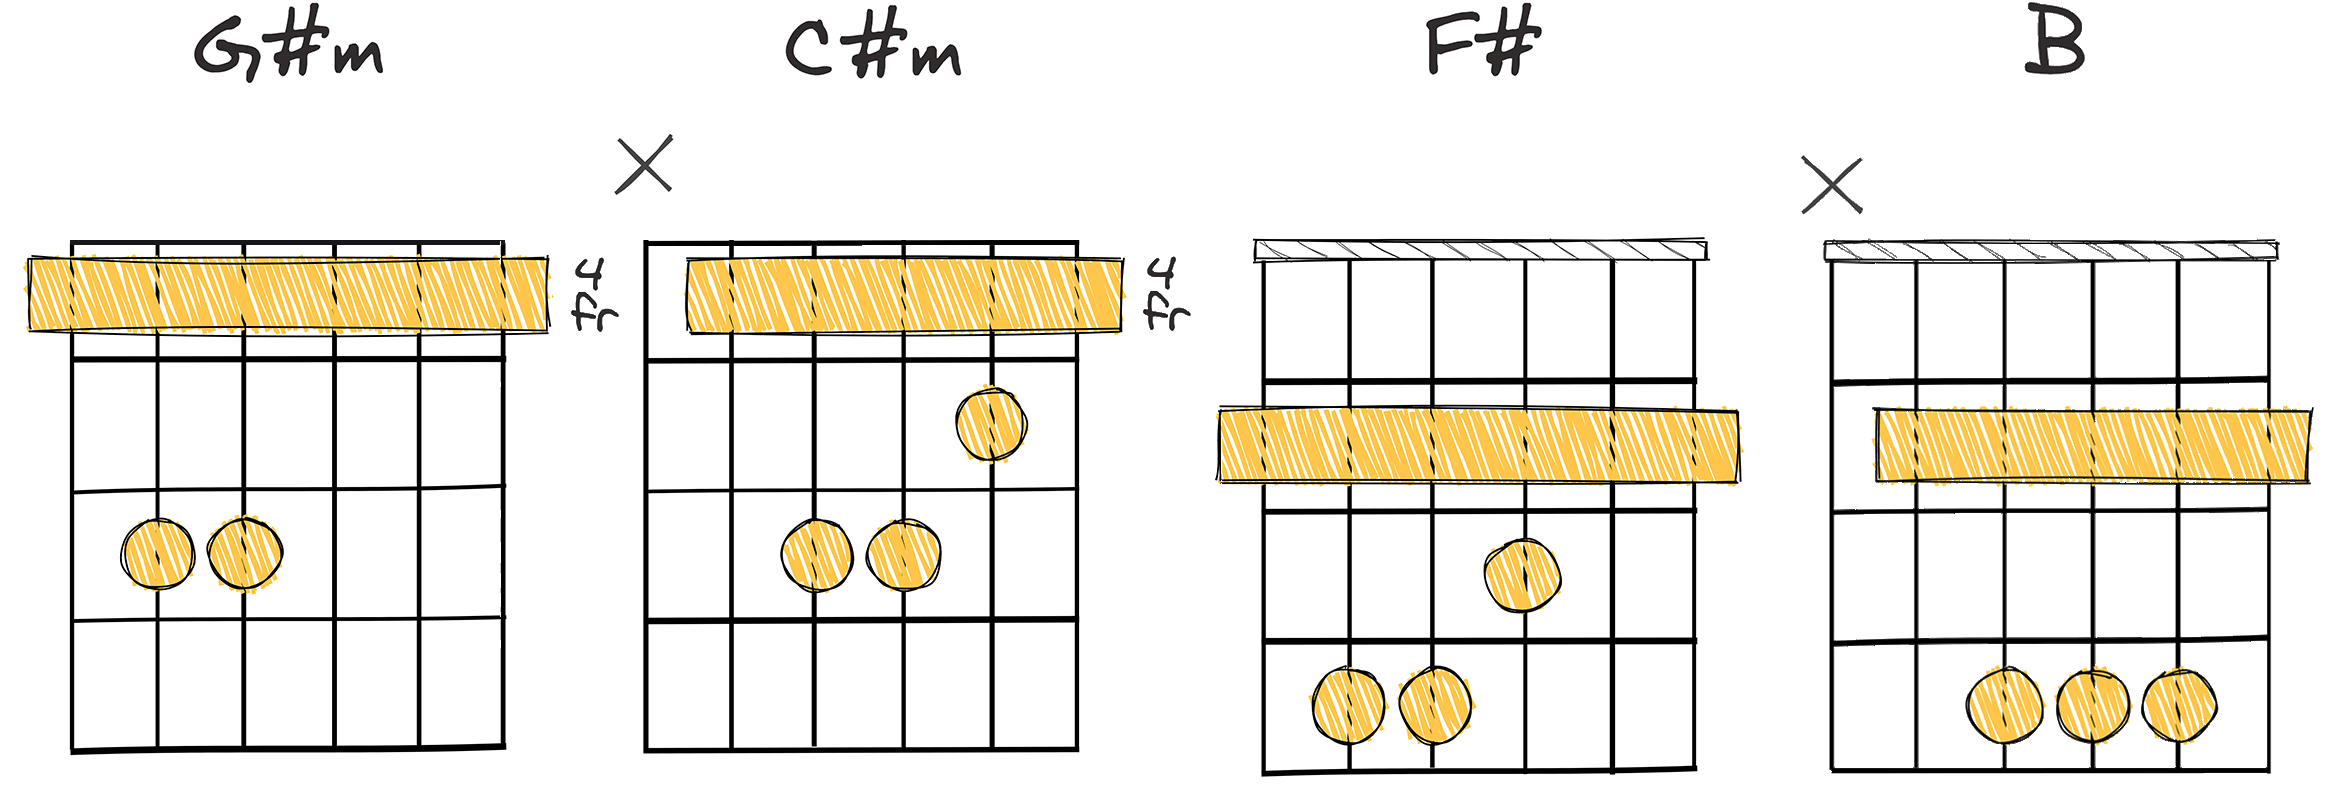 iii-vi-II-V (3-6-2-5)  chords diagram